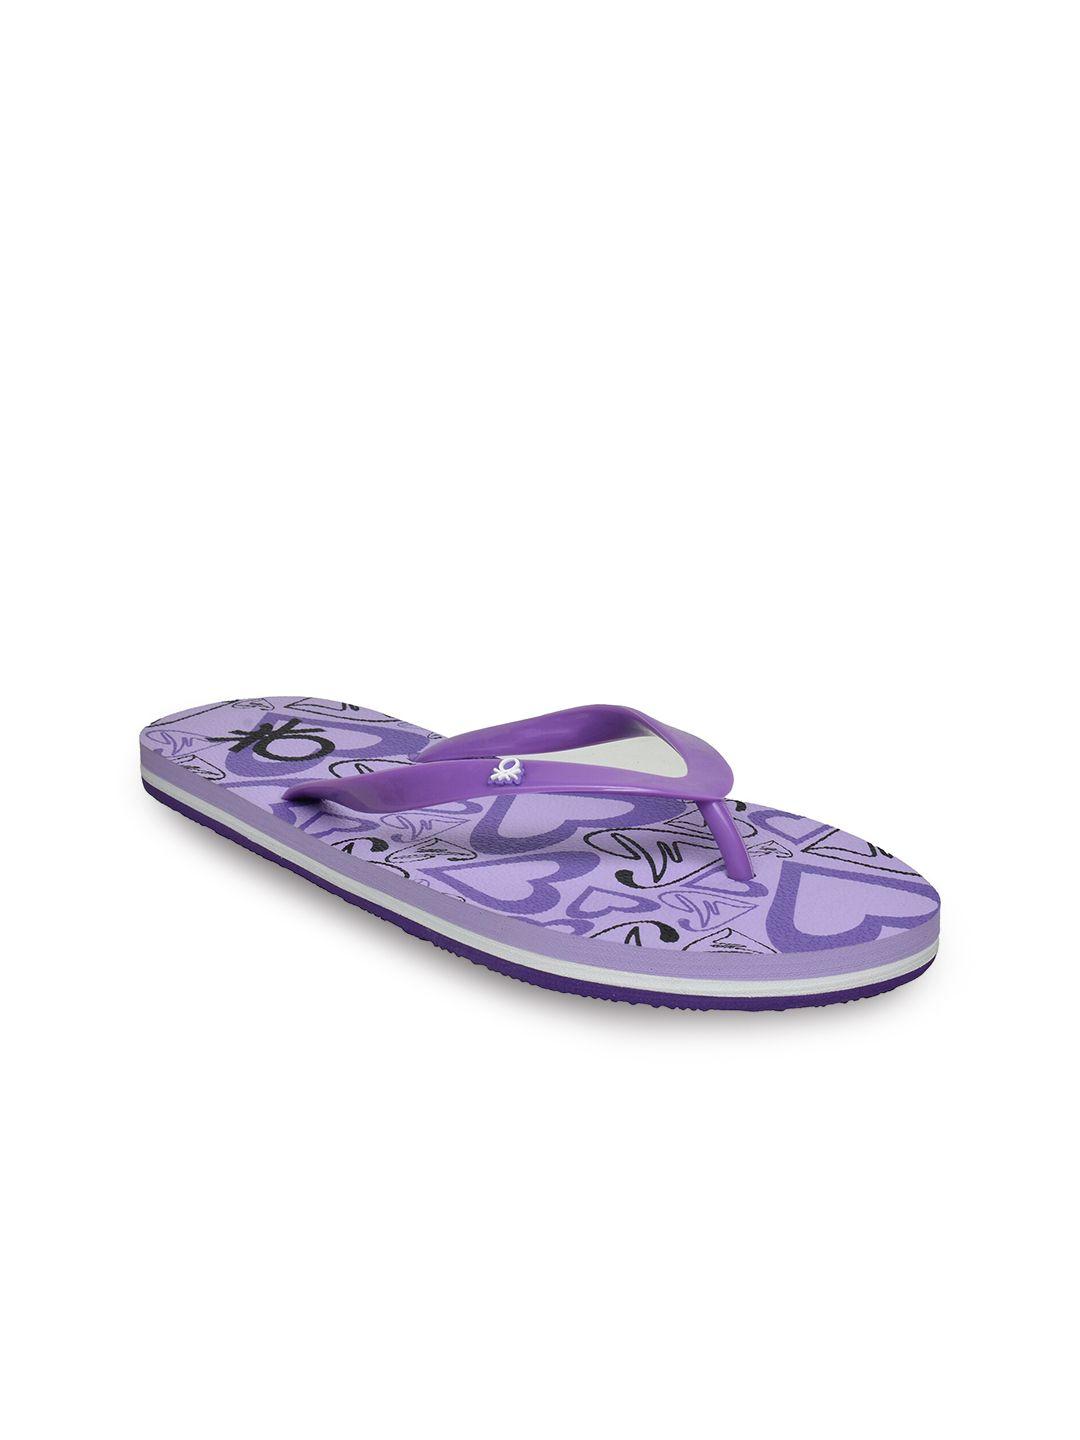 united colors of benetton women purple printed thong flip-flops